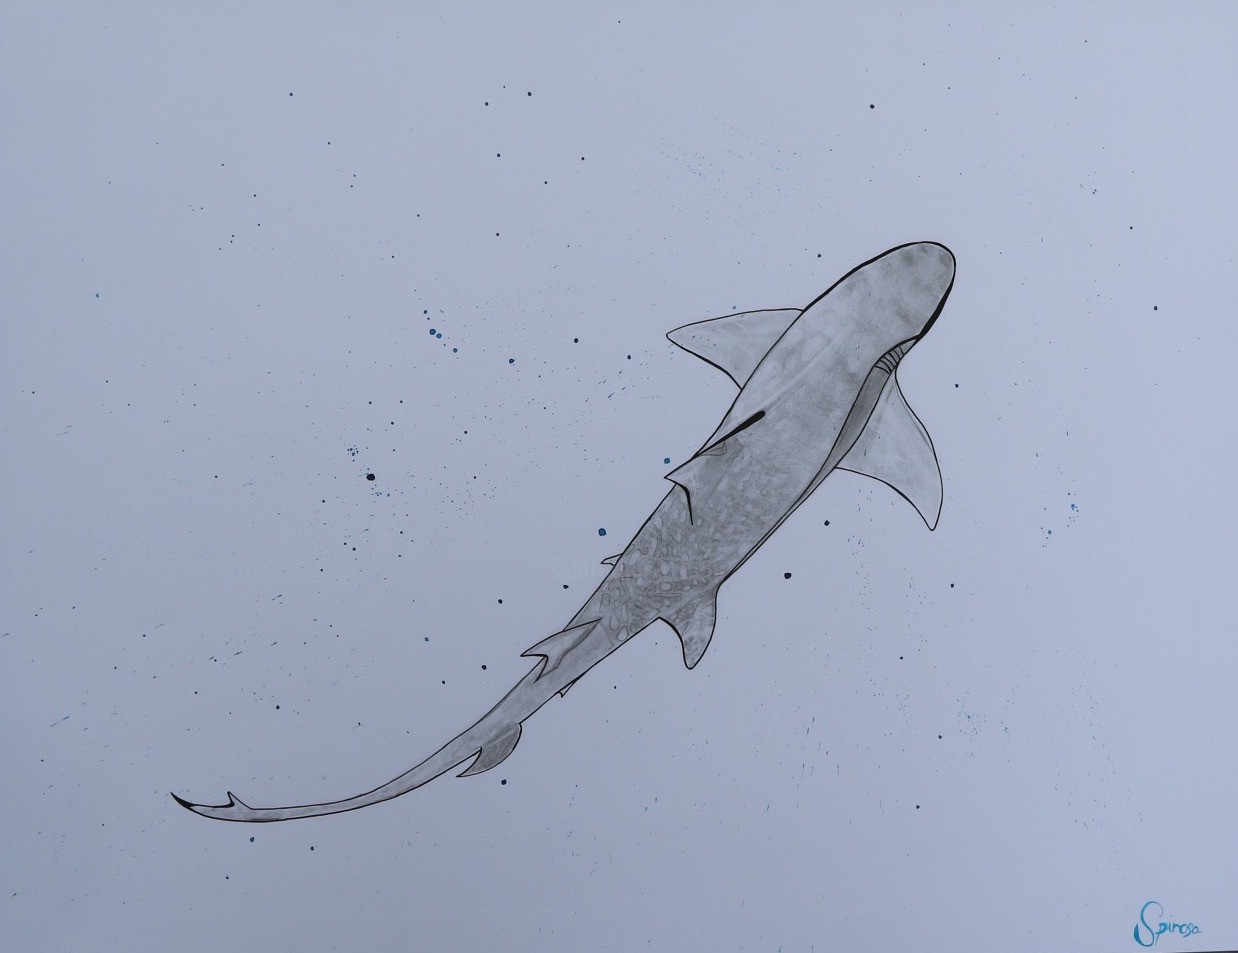 thresher shark drawing